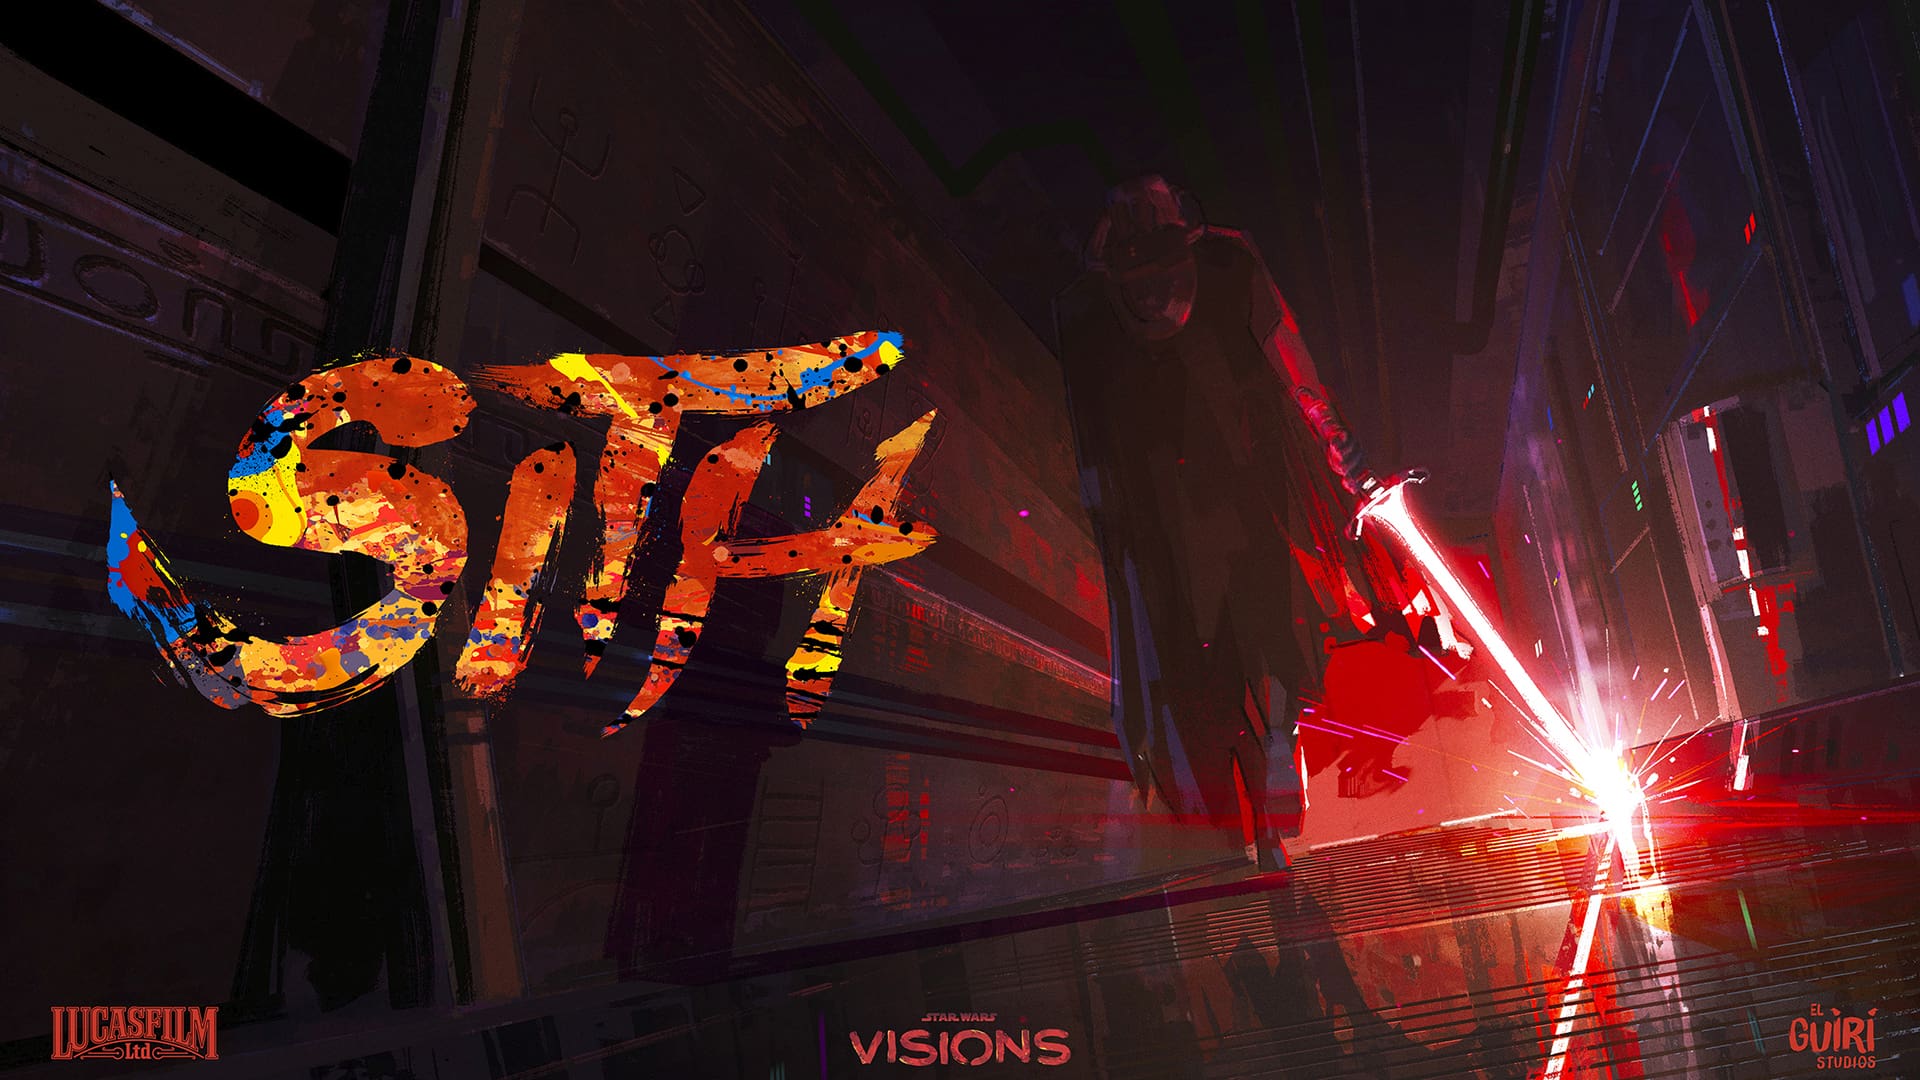 Star Wars: Visions "Sith"